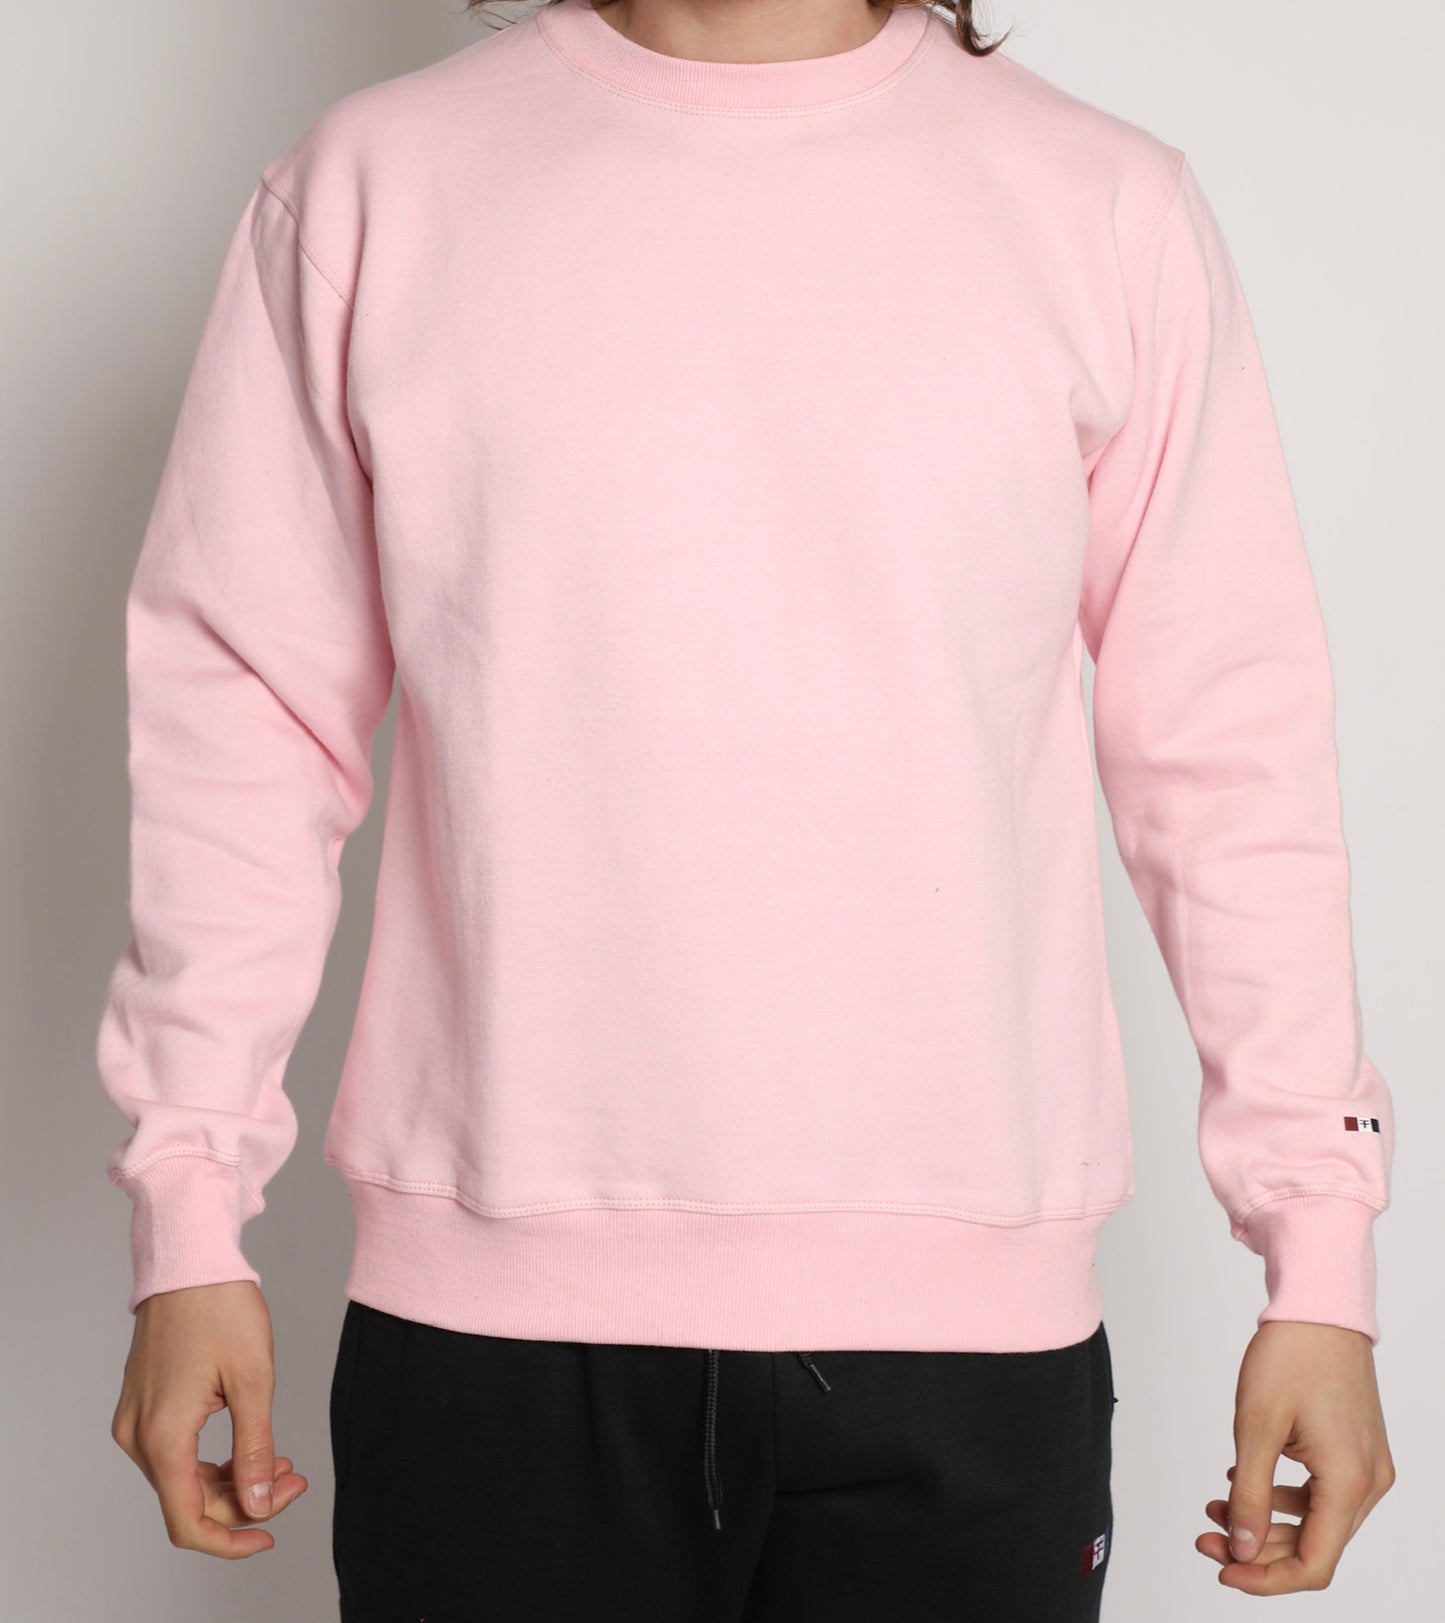 Essential crew neck SweatShirt - fashcolony – Pink